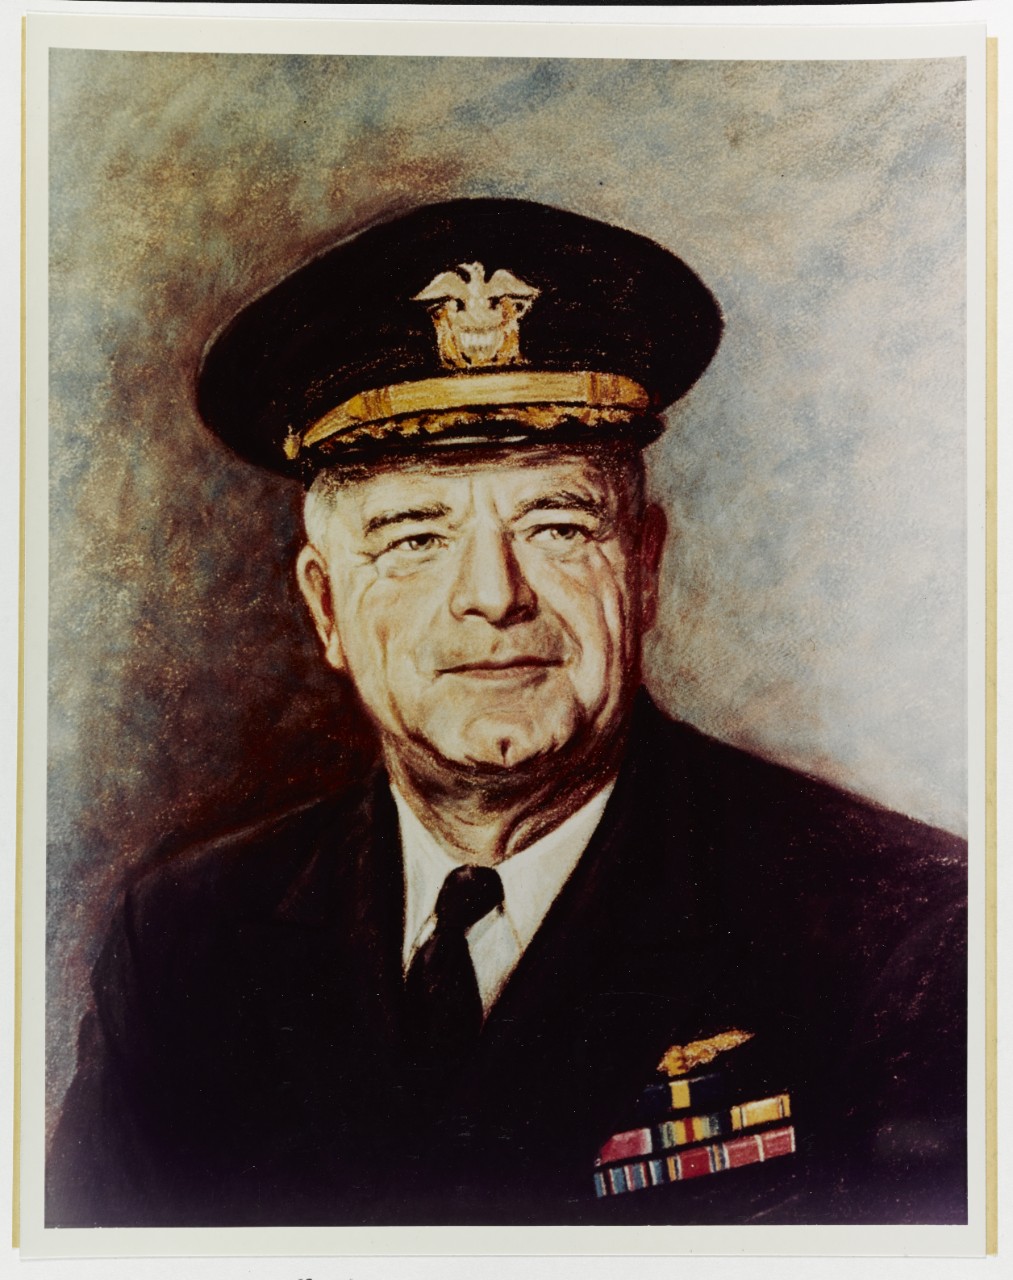 Captain Harold E. Saunders, USN